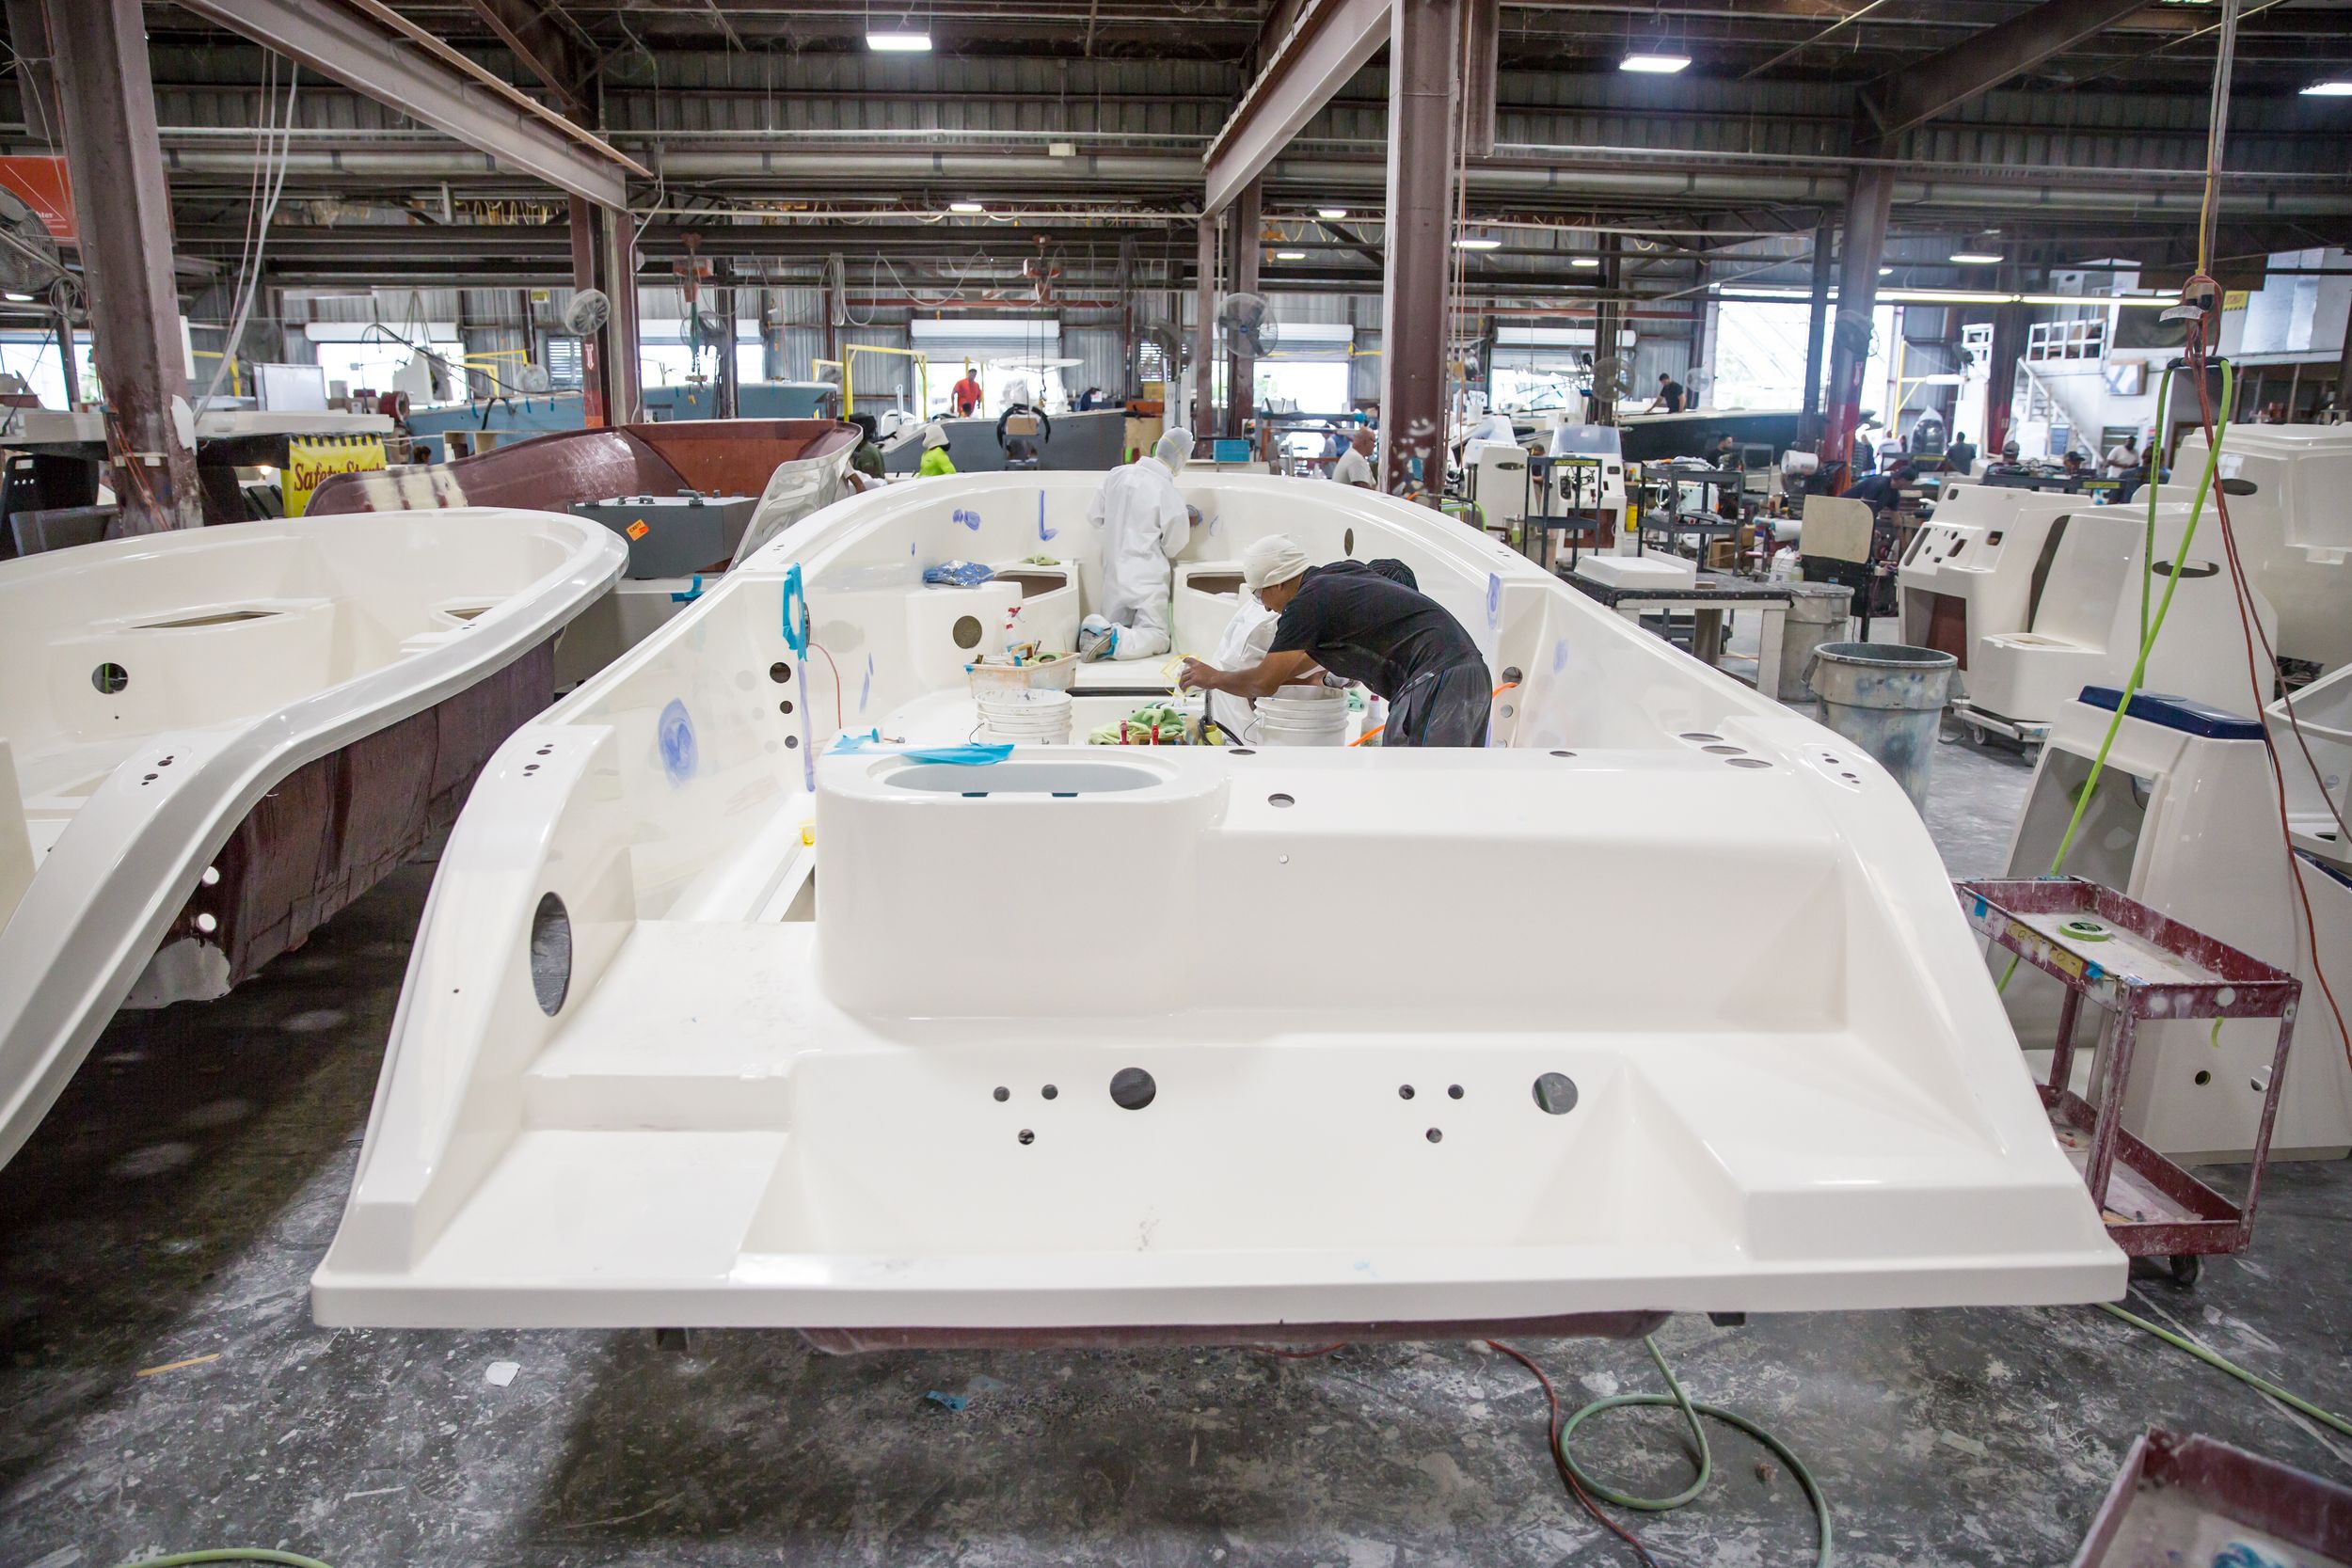 Maverick boat group manufacturer working on almost complete boat.